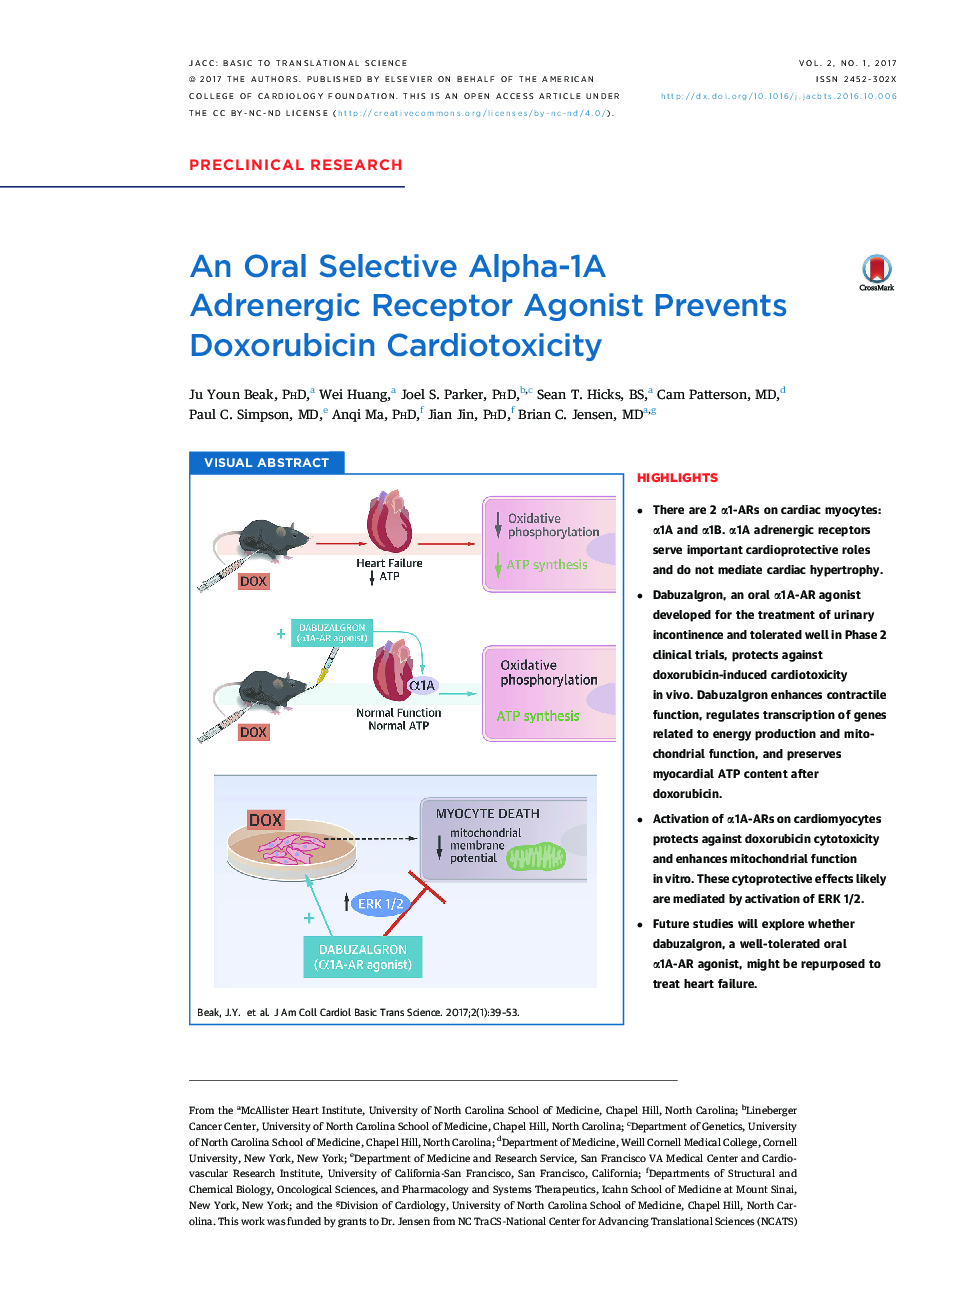 An Oral Selective Alpha-1A AdrenergicÂ Receptor Agonist Prevents Doxorubicin Cardiotoxicity